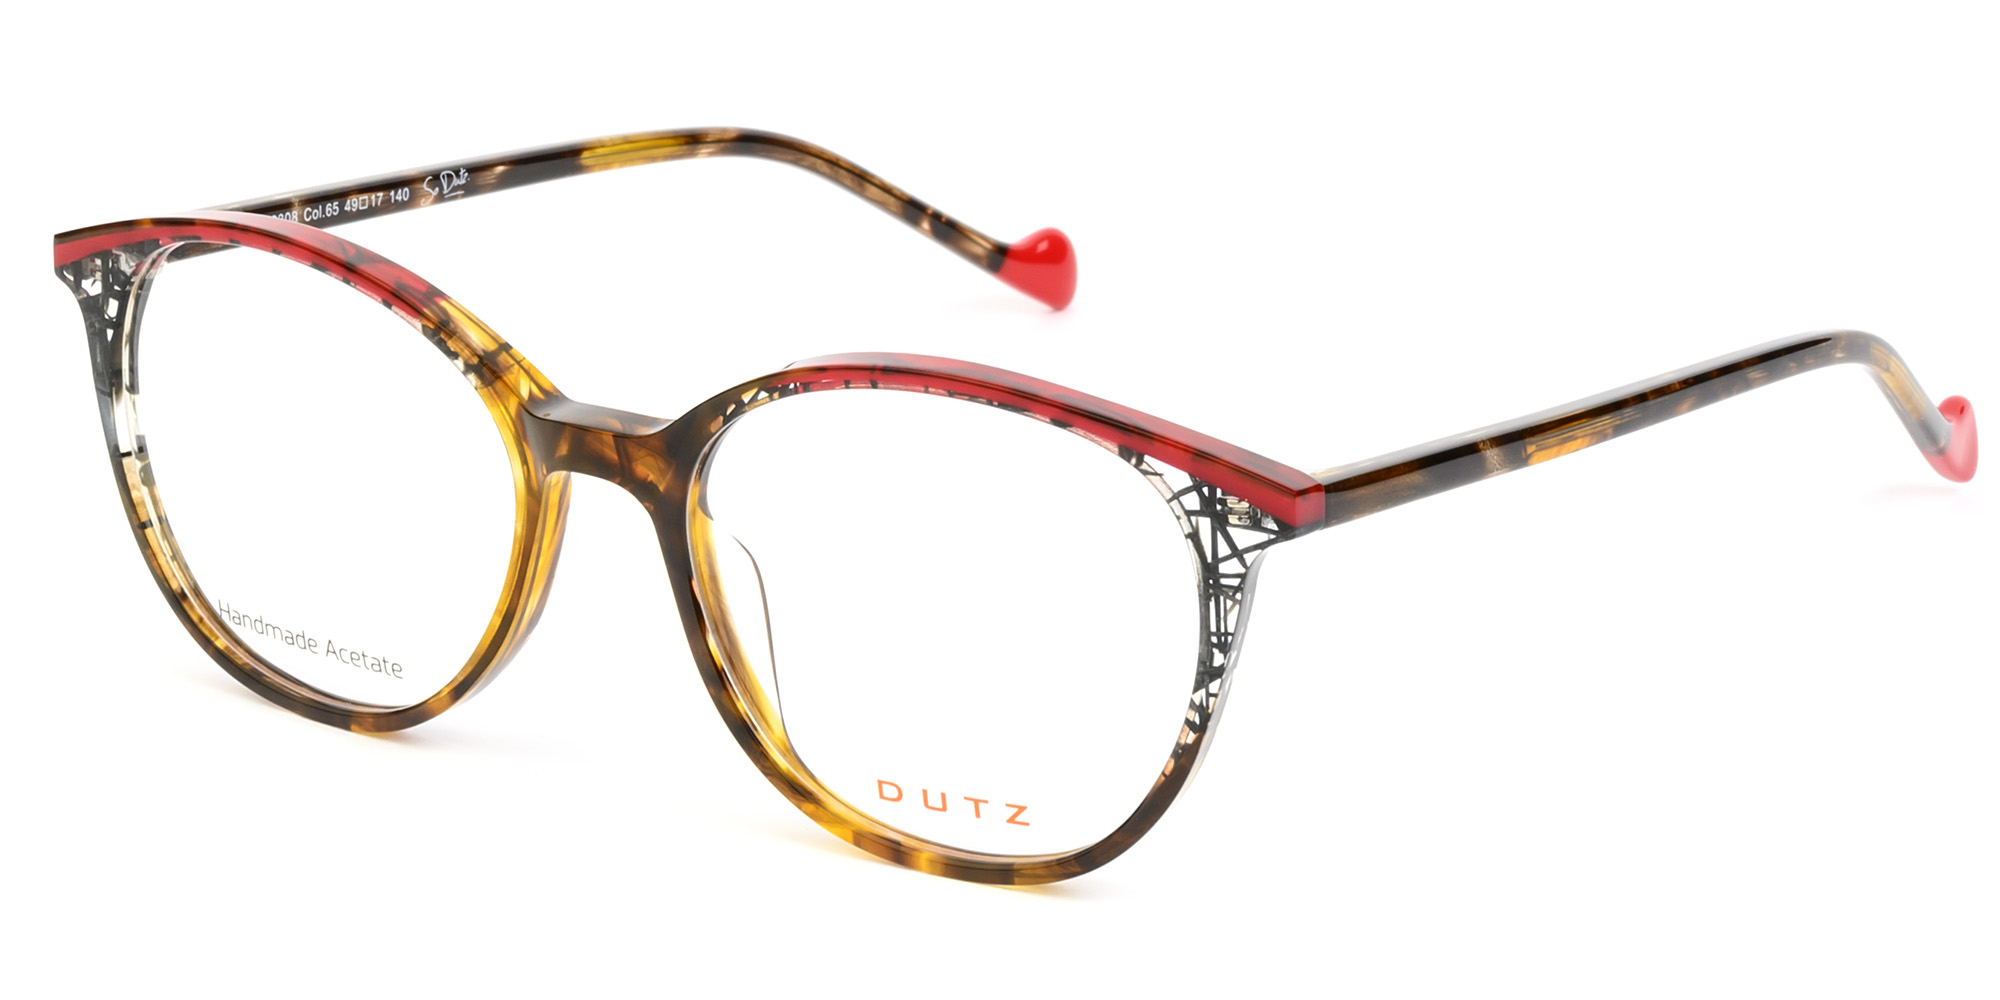 DZ2308 (49-17/140) - Dutz Eyewear